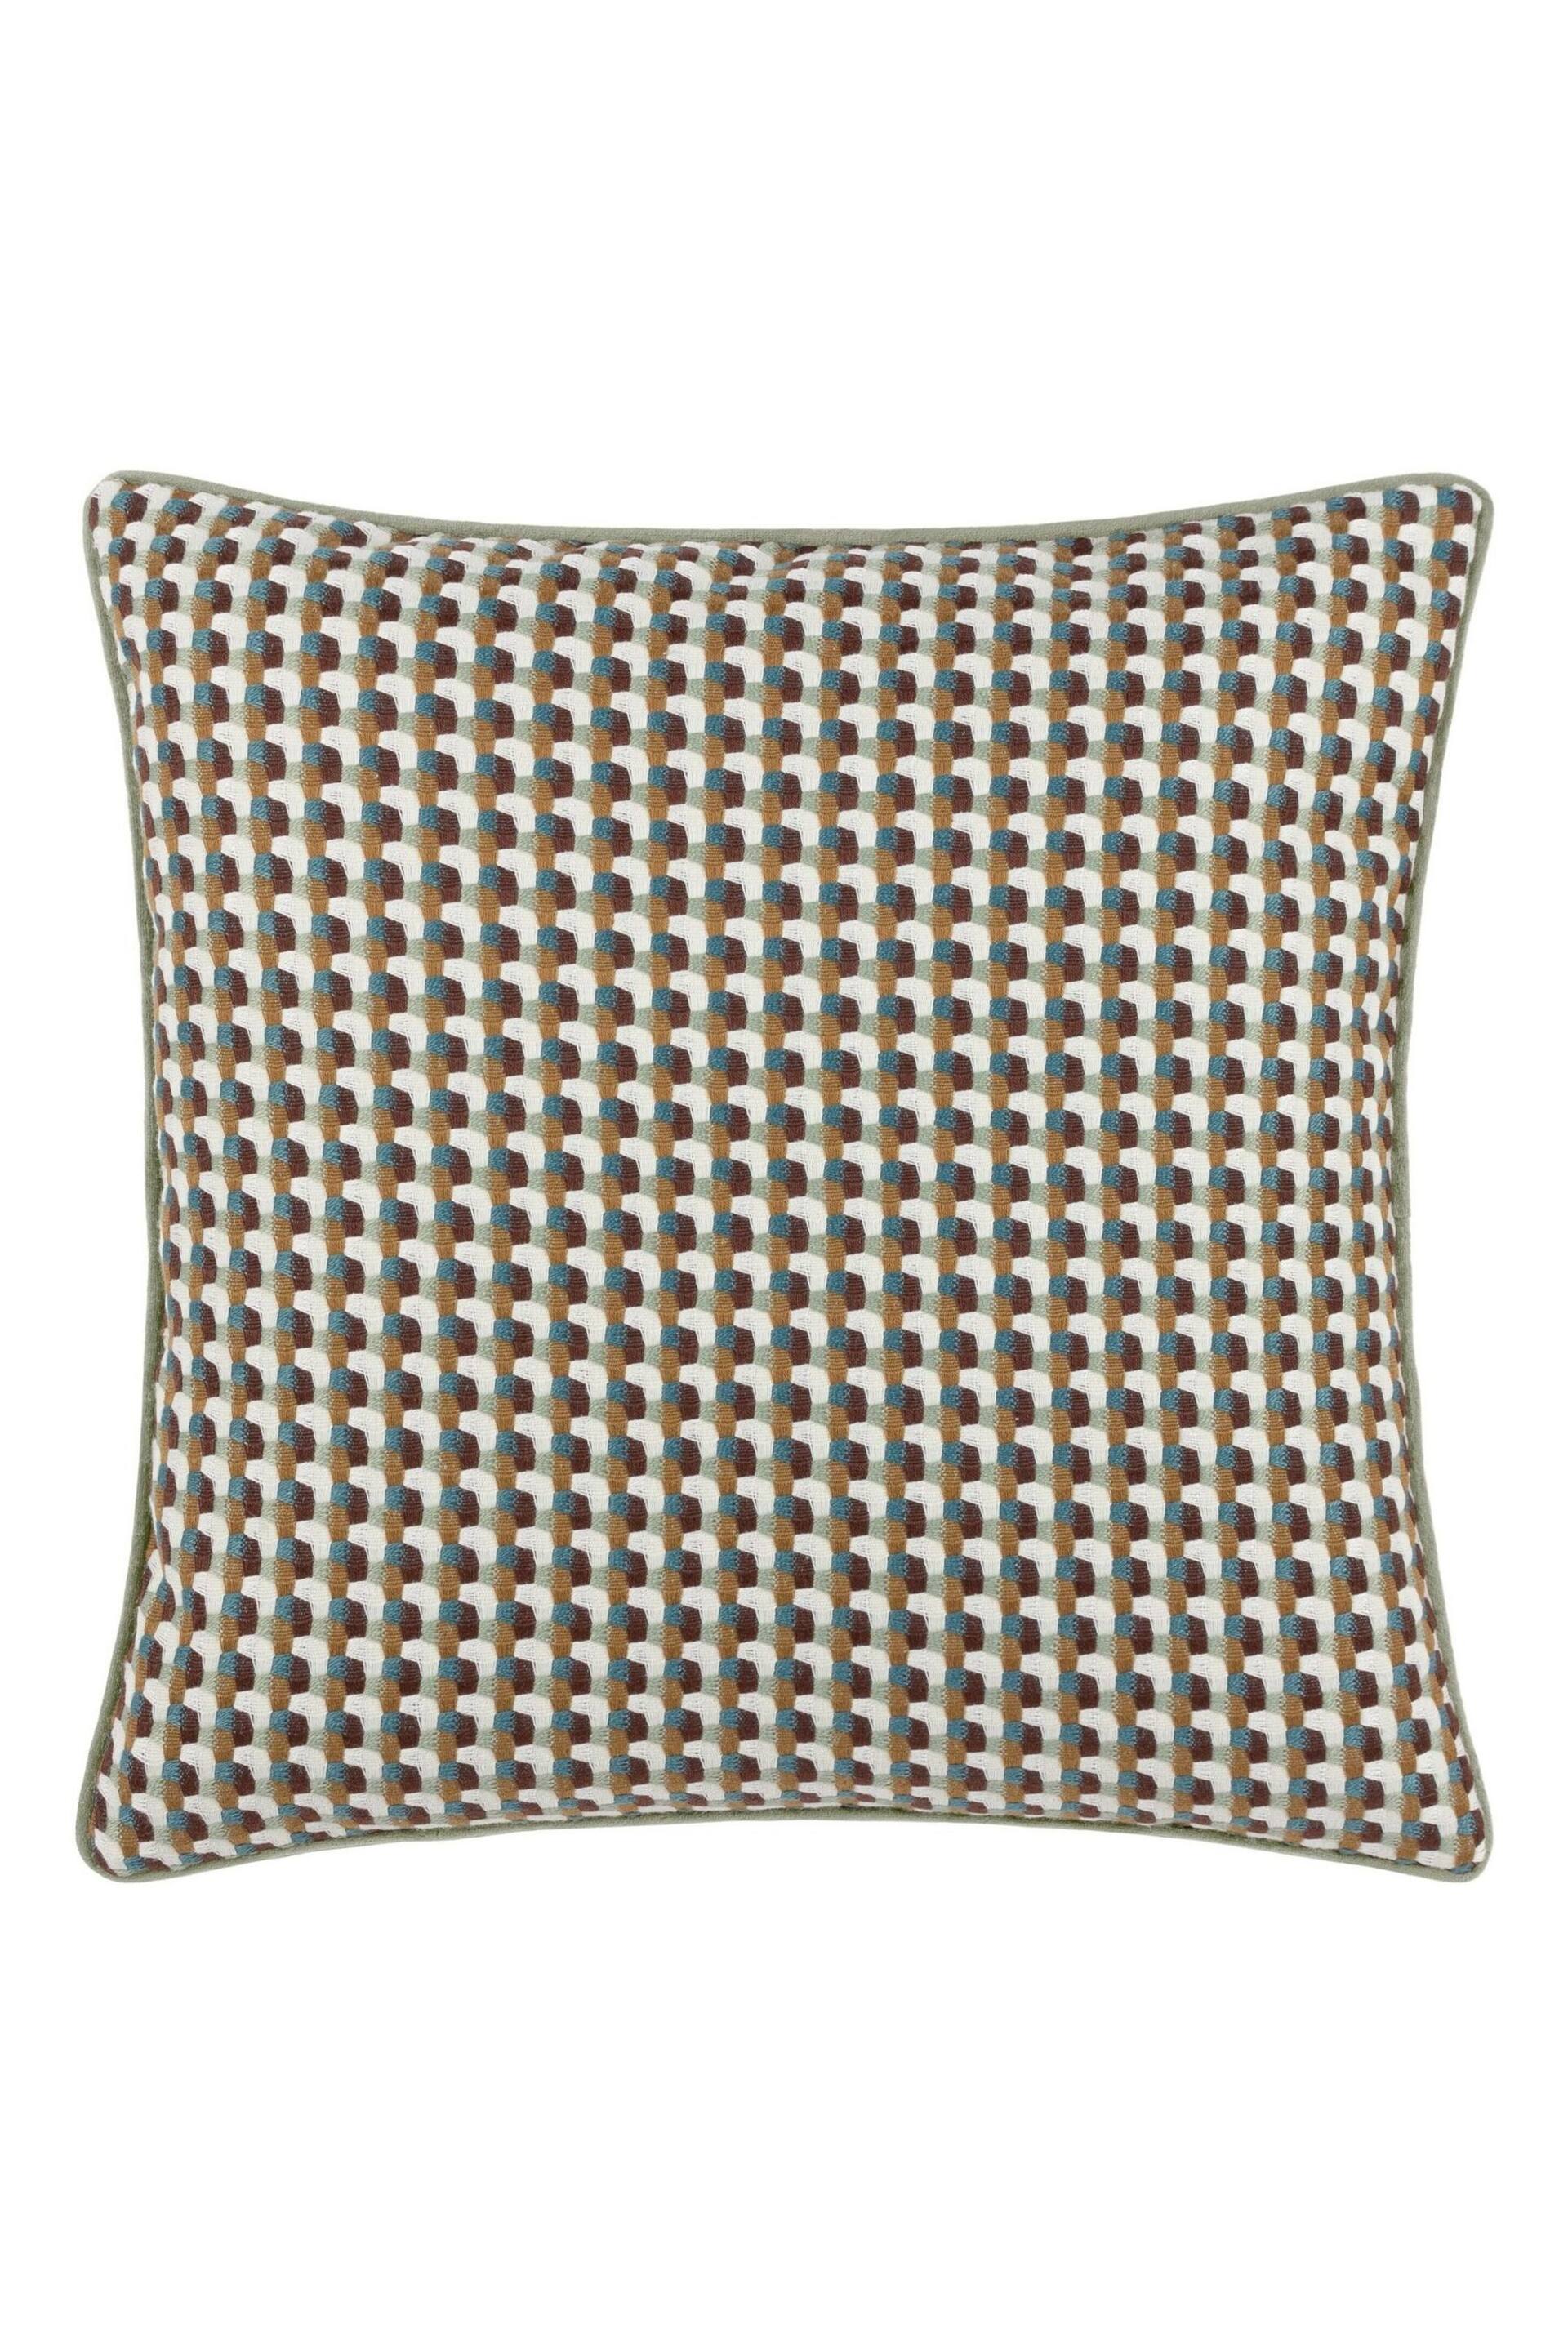 Furn Green Marttel Geometric Jacquard Feather Filled Cushion - Image 3 of 6